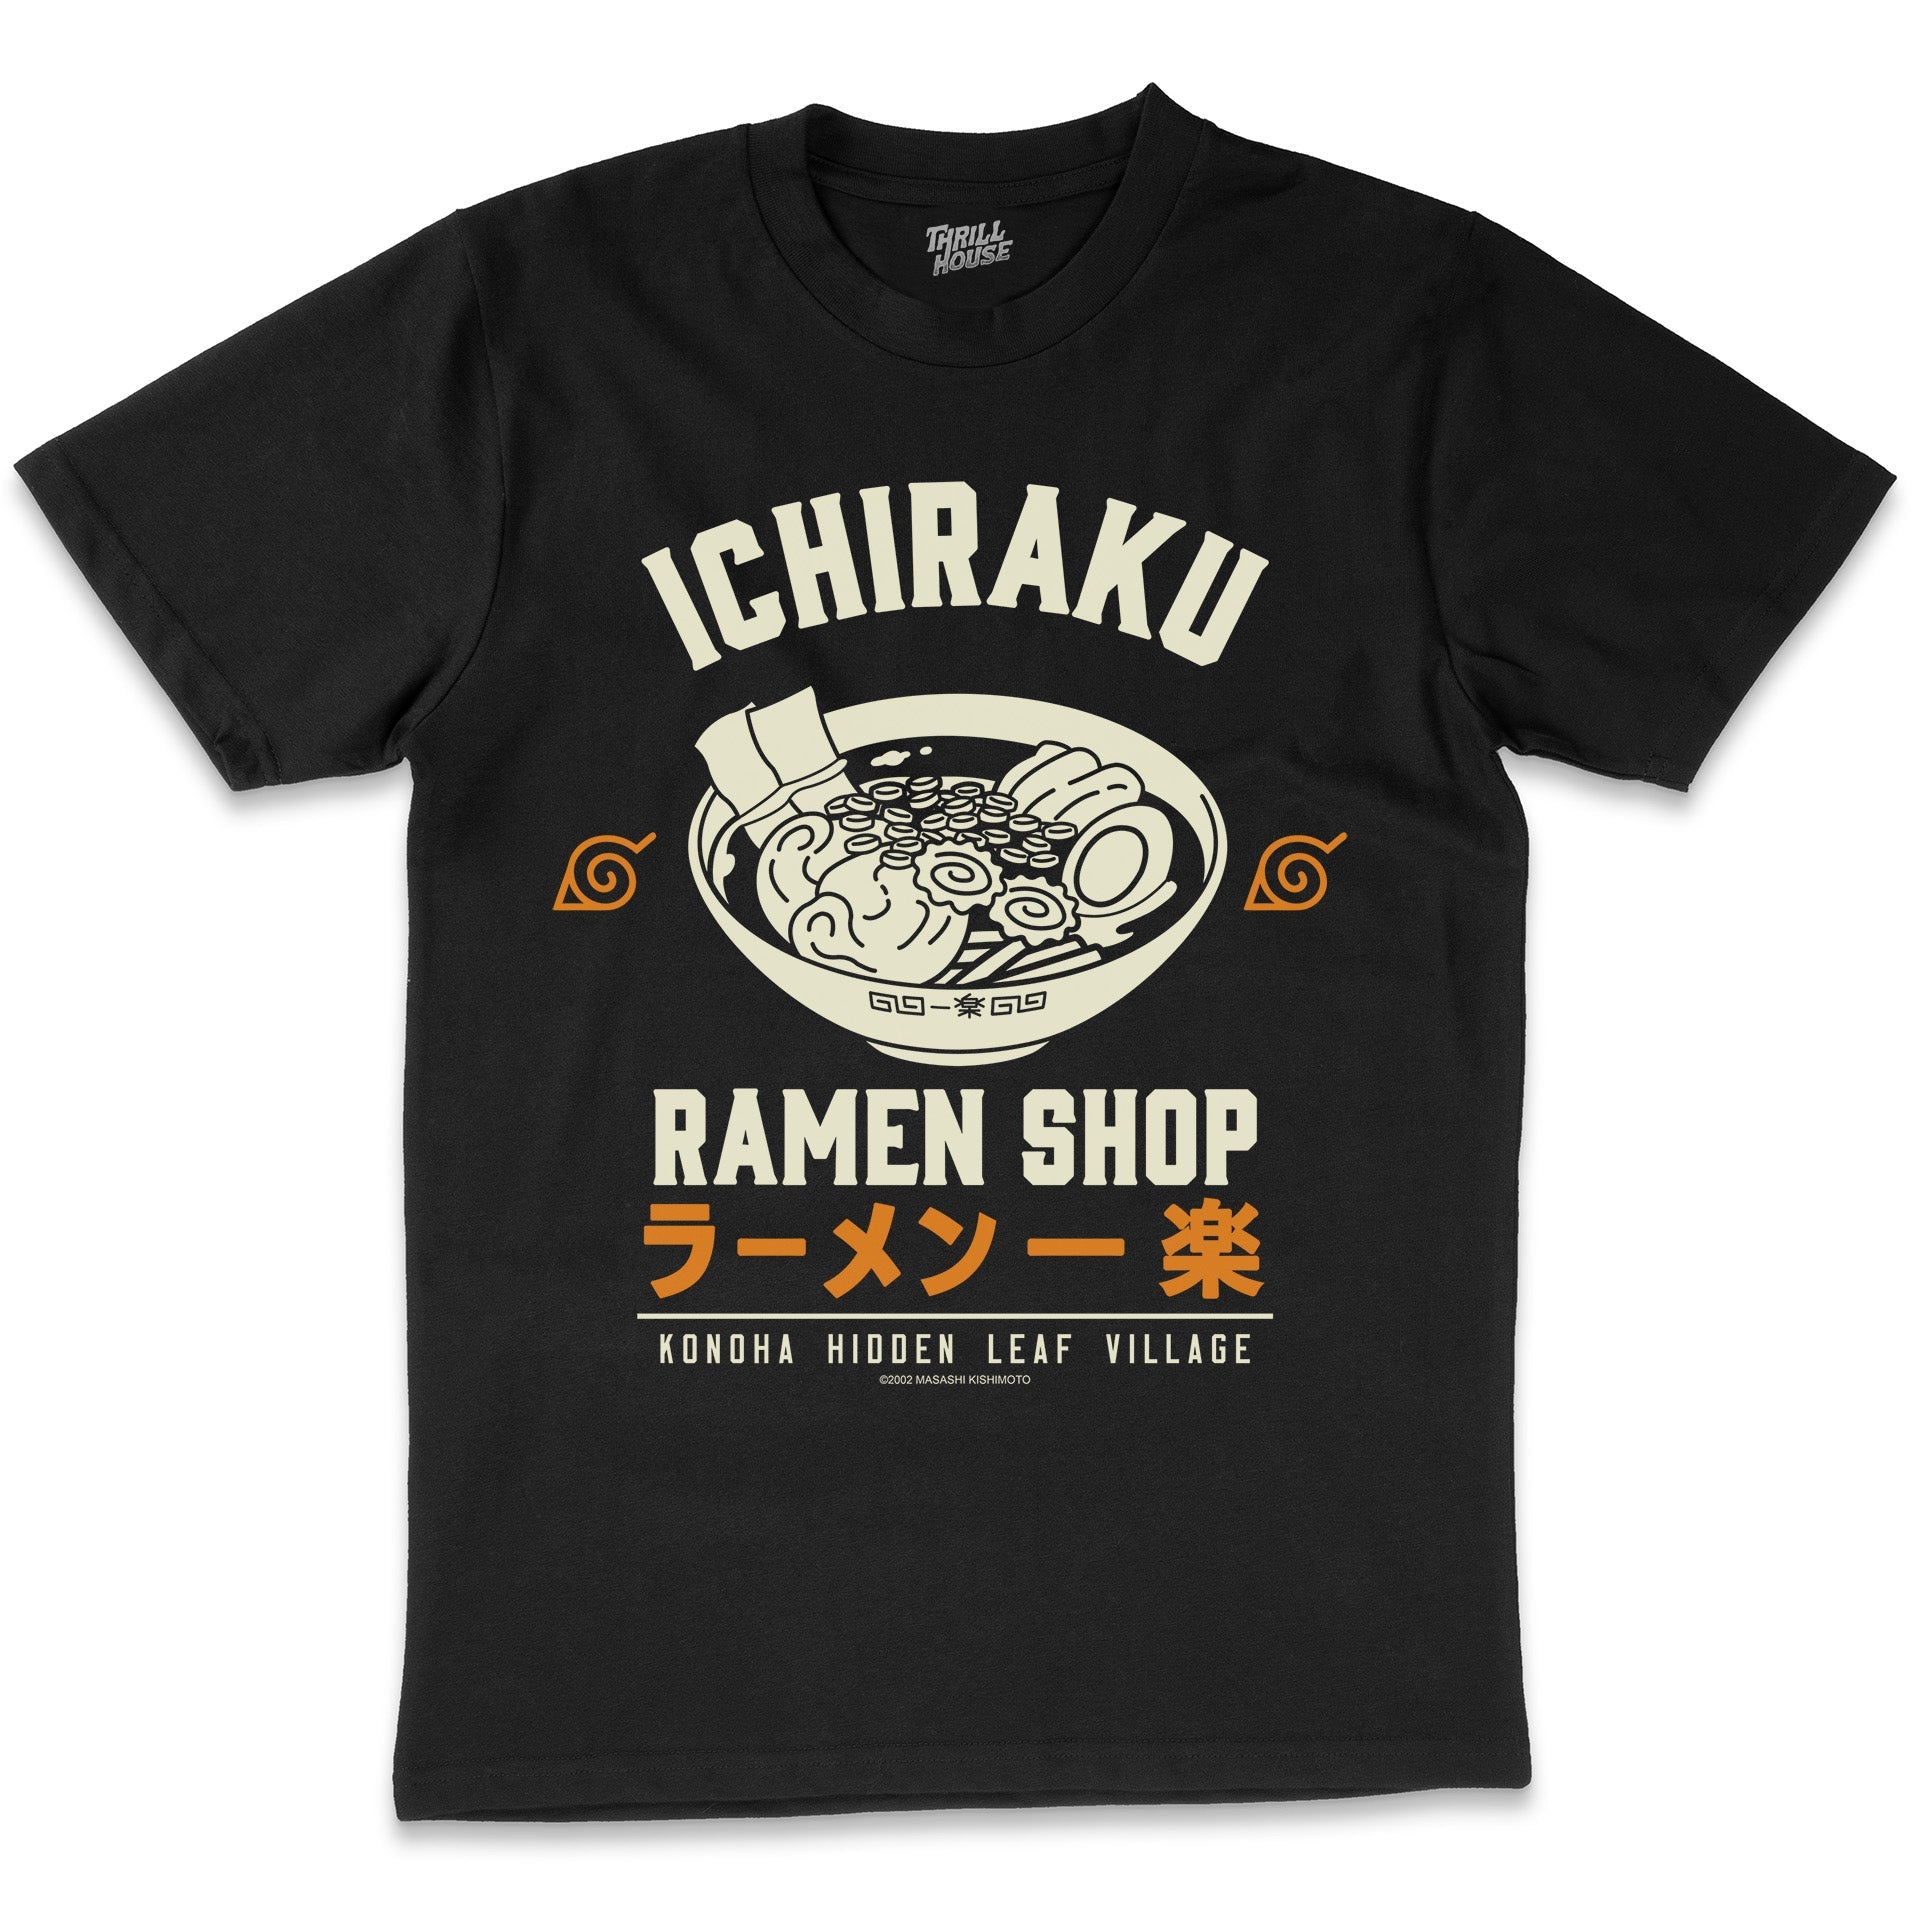 Naruto Ichiraku Ramen Shop Japanese Manga Adventure Ninja Anime Cartoon Officially Licensed T-Shirt